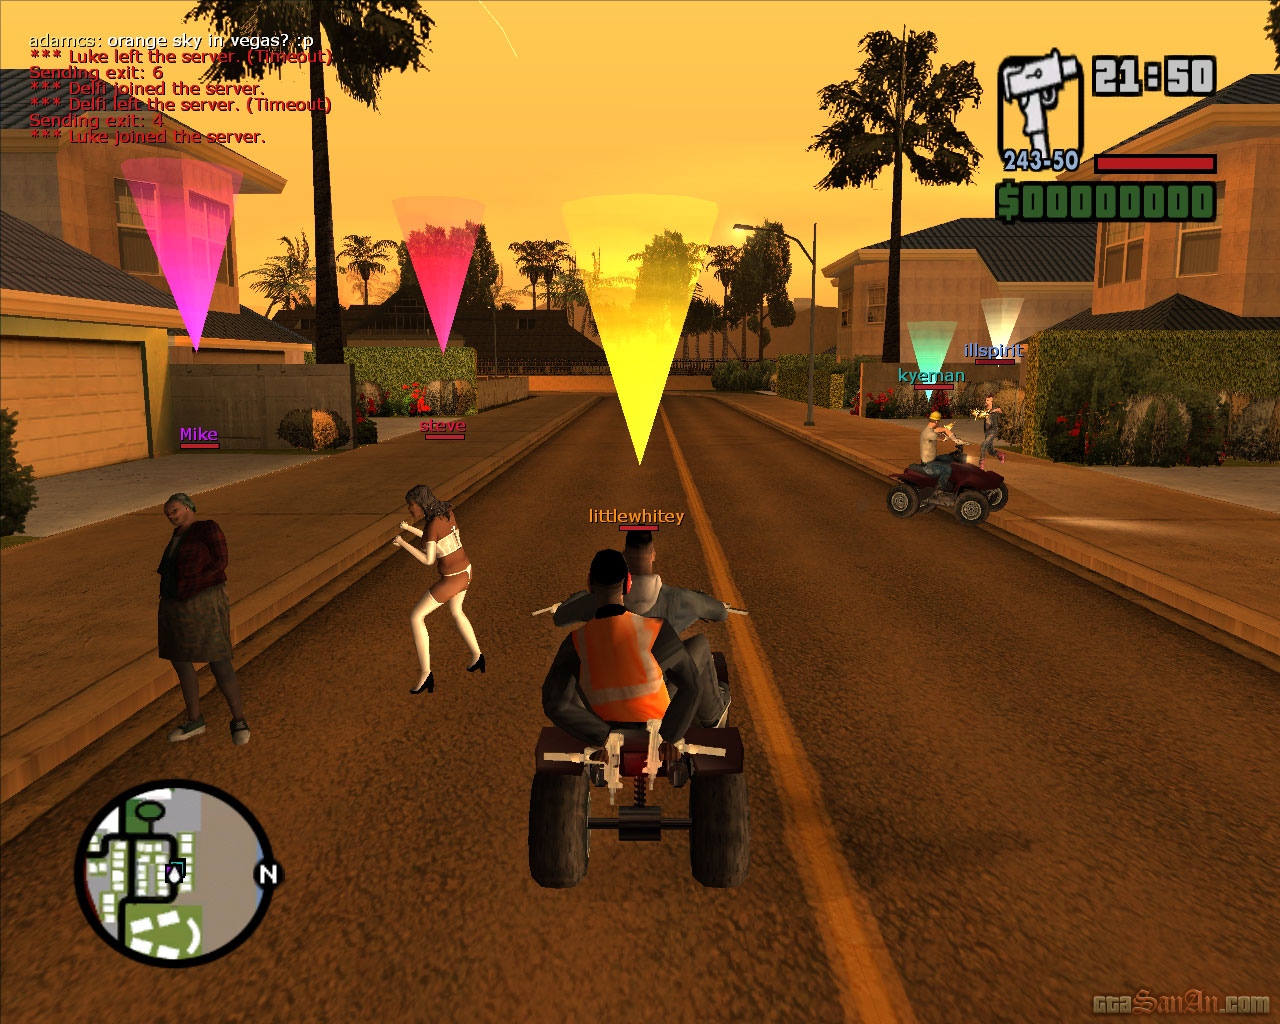 San andreas multiplayer 0.3 7. Grand Theft auto San Andreas мультиплеер. ГТА San Andreas SAMP. Играем ГТА санандрес мультиплеер. Игры самп на ПК.